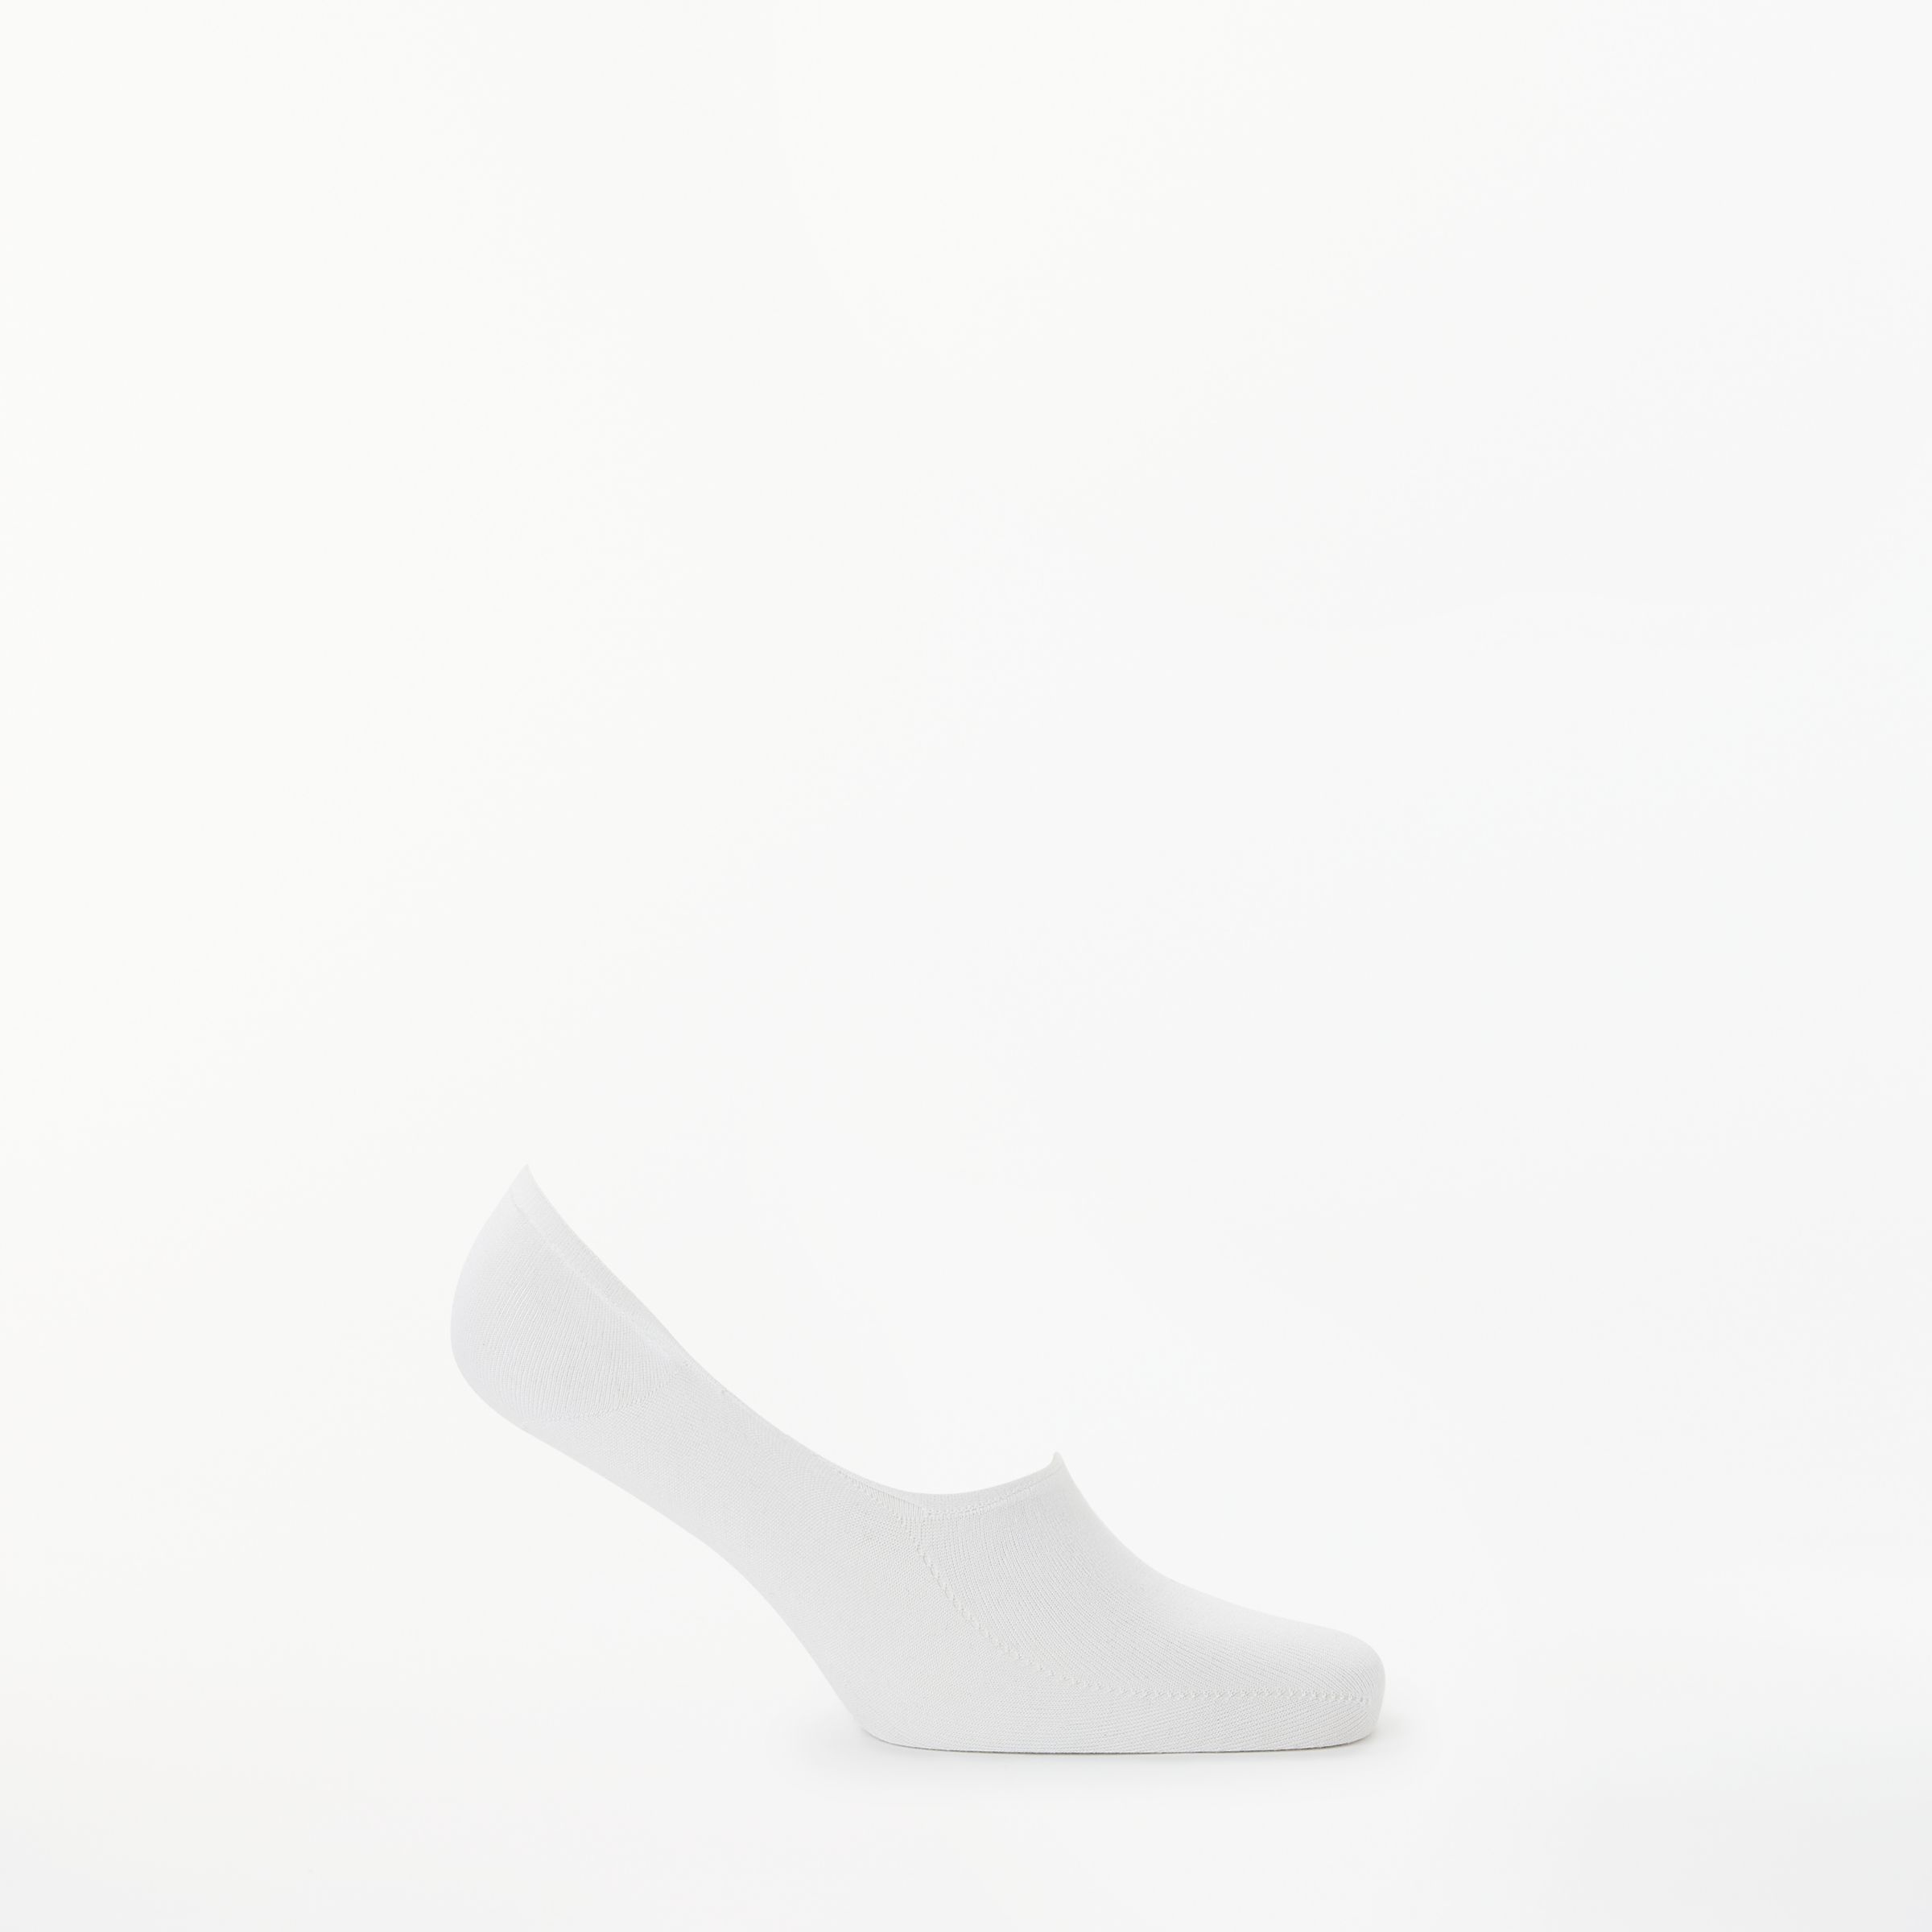 John Lewis Invisible Trainer Socks, White at John Lewis & Partners